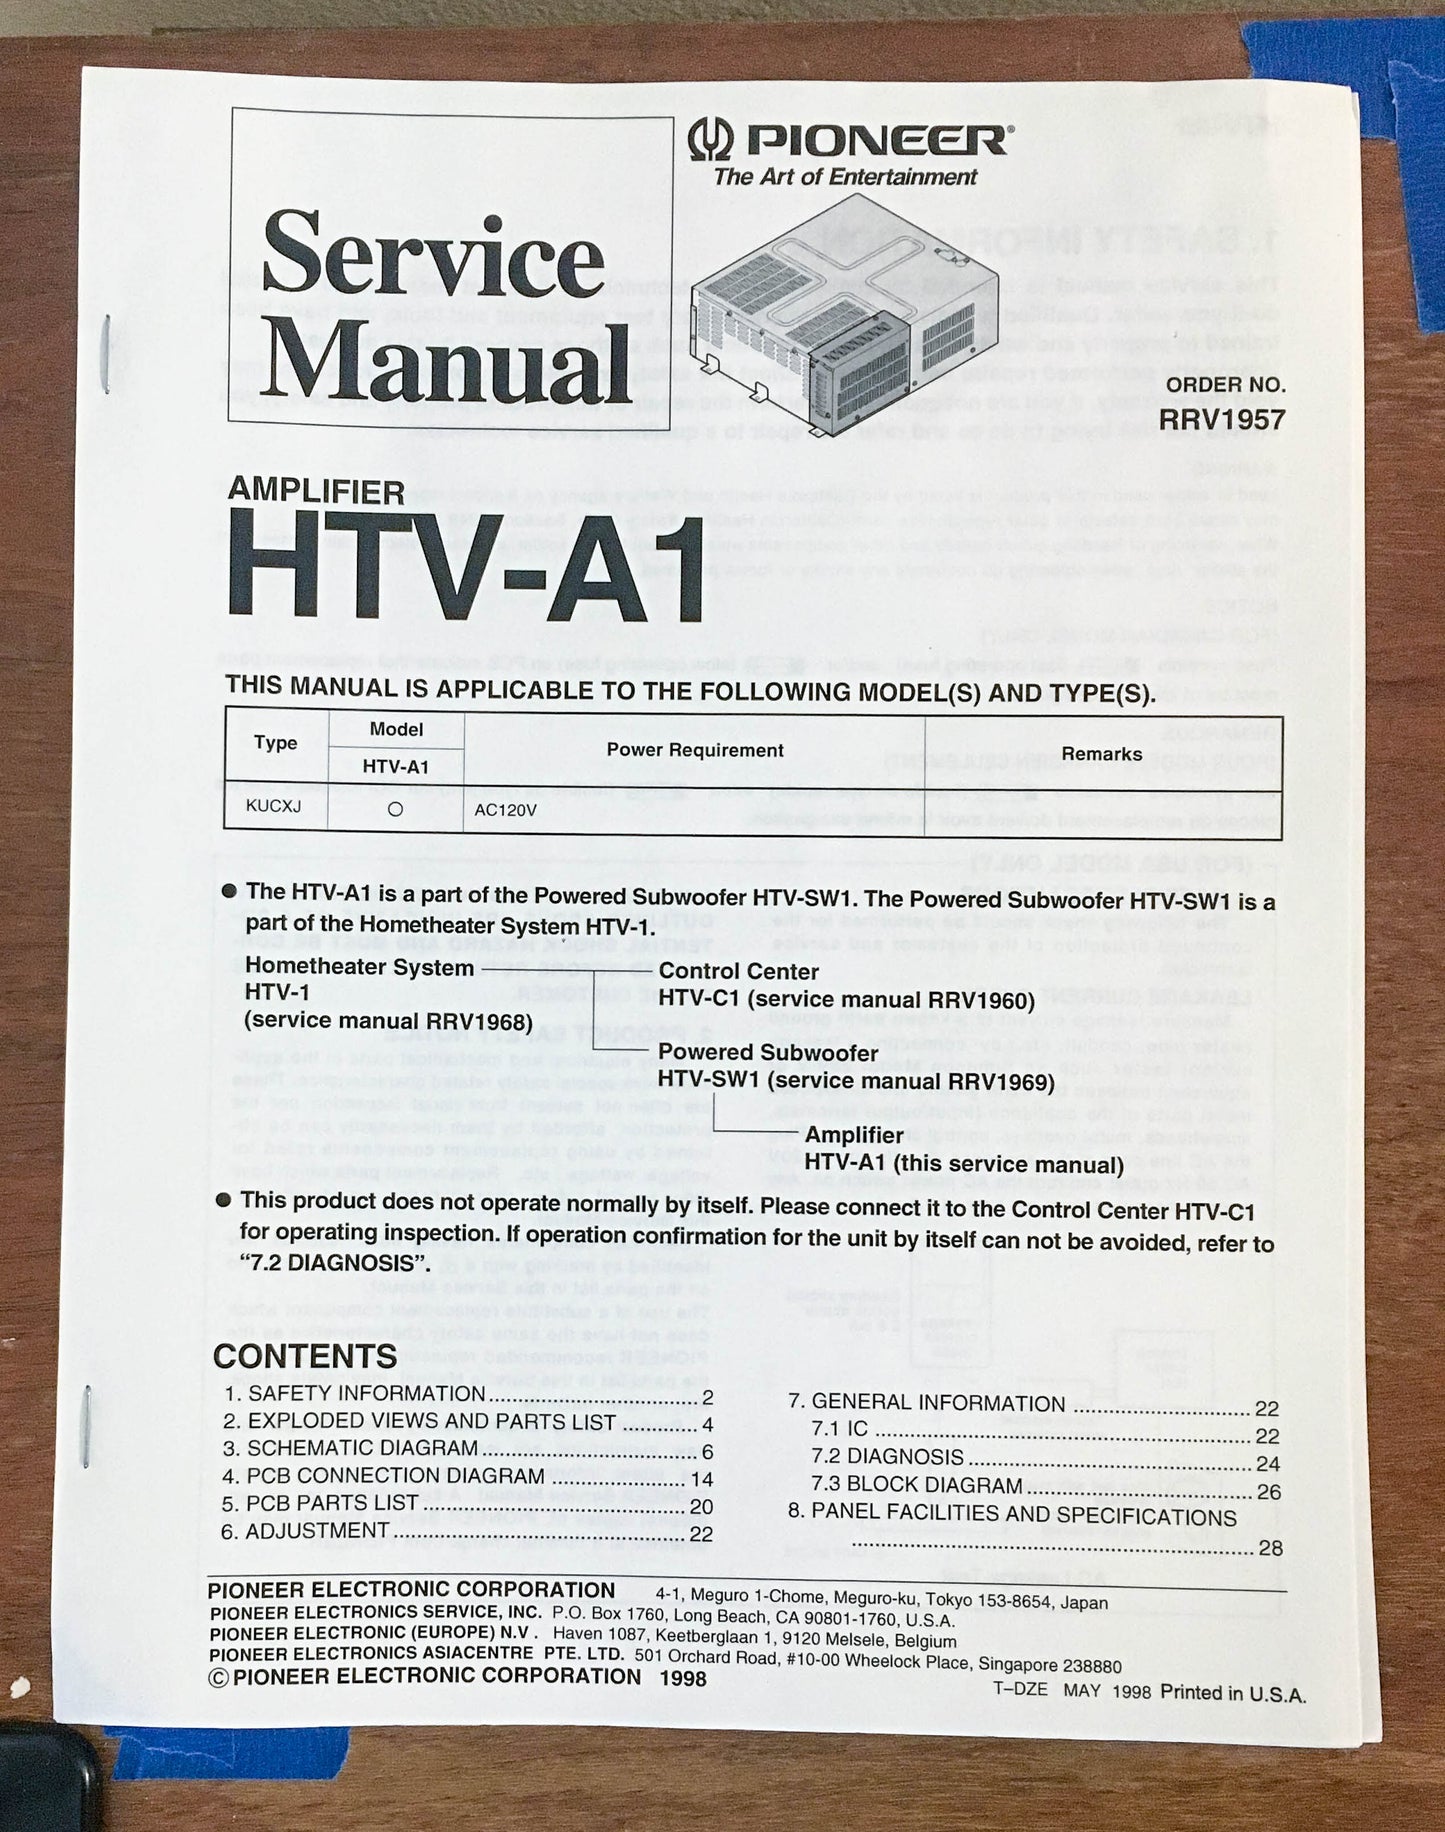 Pioneer HTV-A1 Amplifier Service Manual *Original*